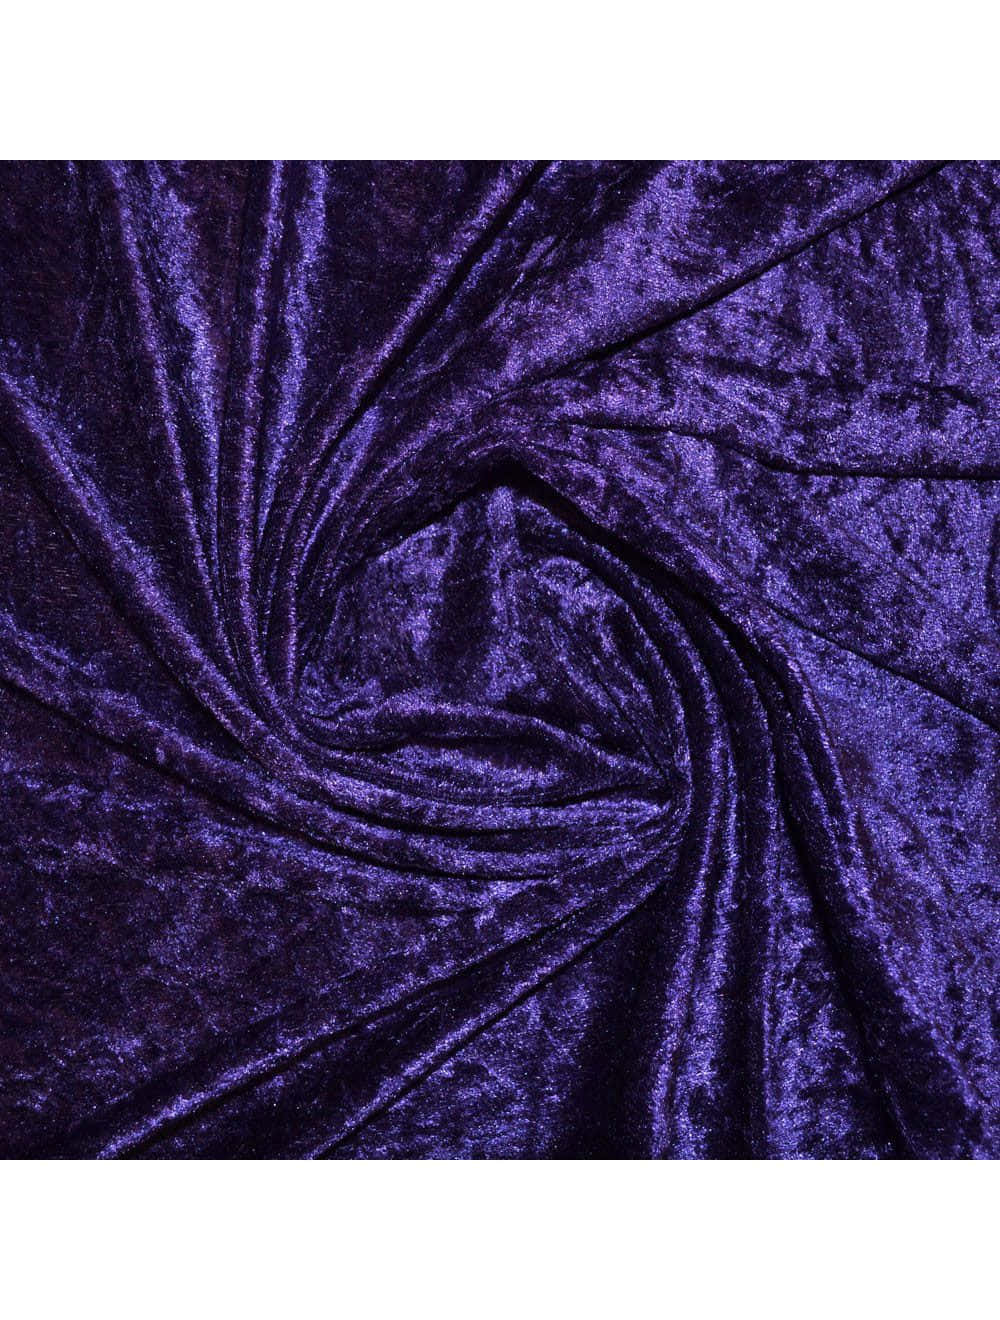 Unatela De Terciopelo Púrpura Lujosamente Suave Y Mullida. Fondo de pantalla